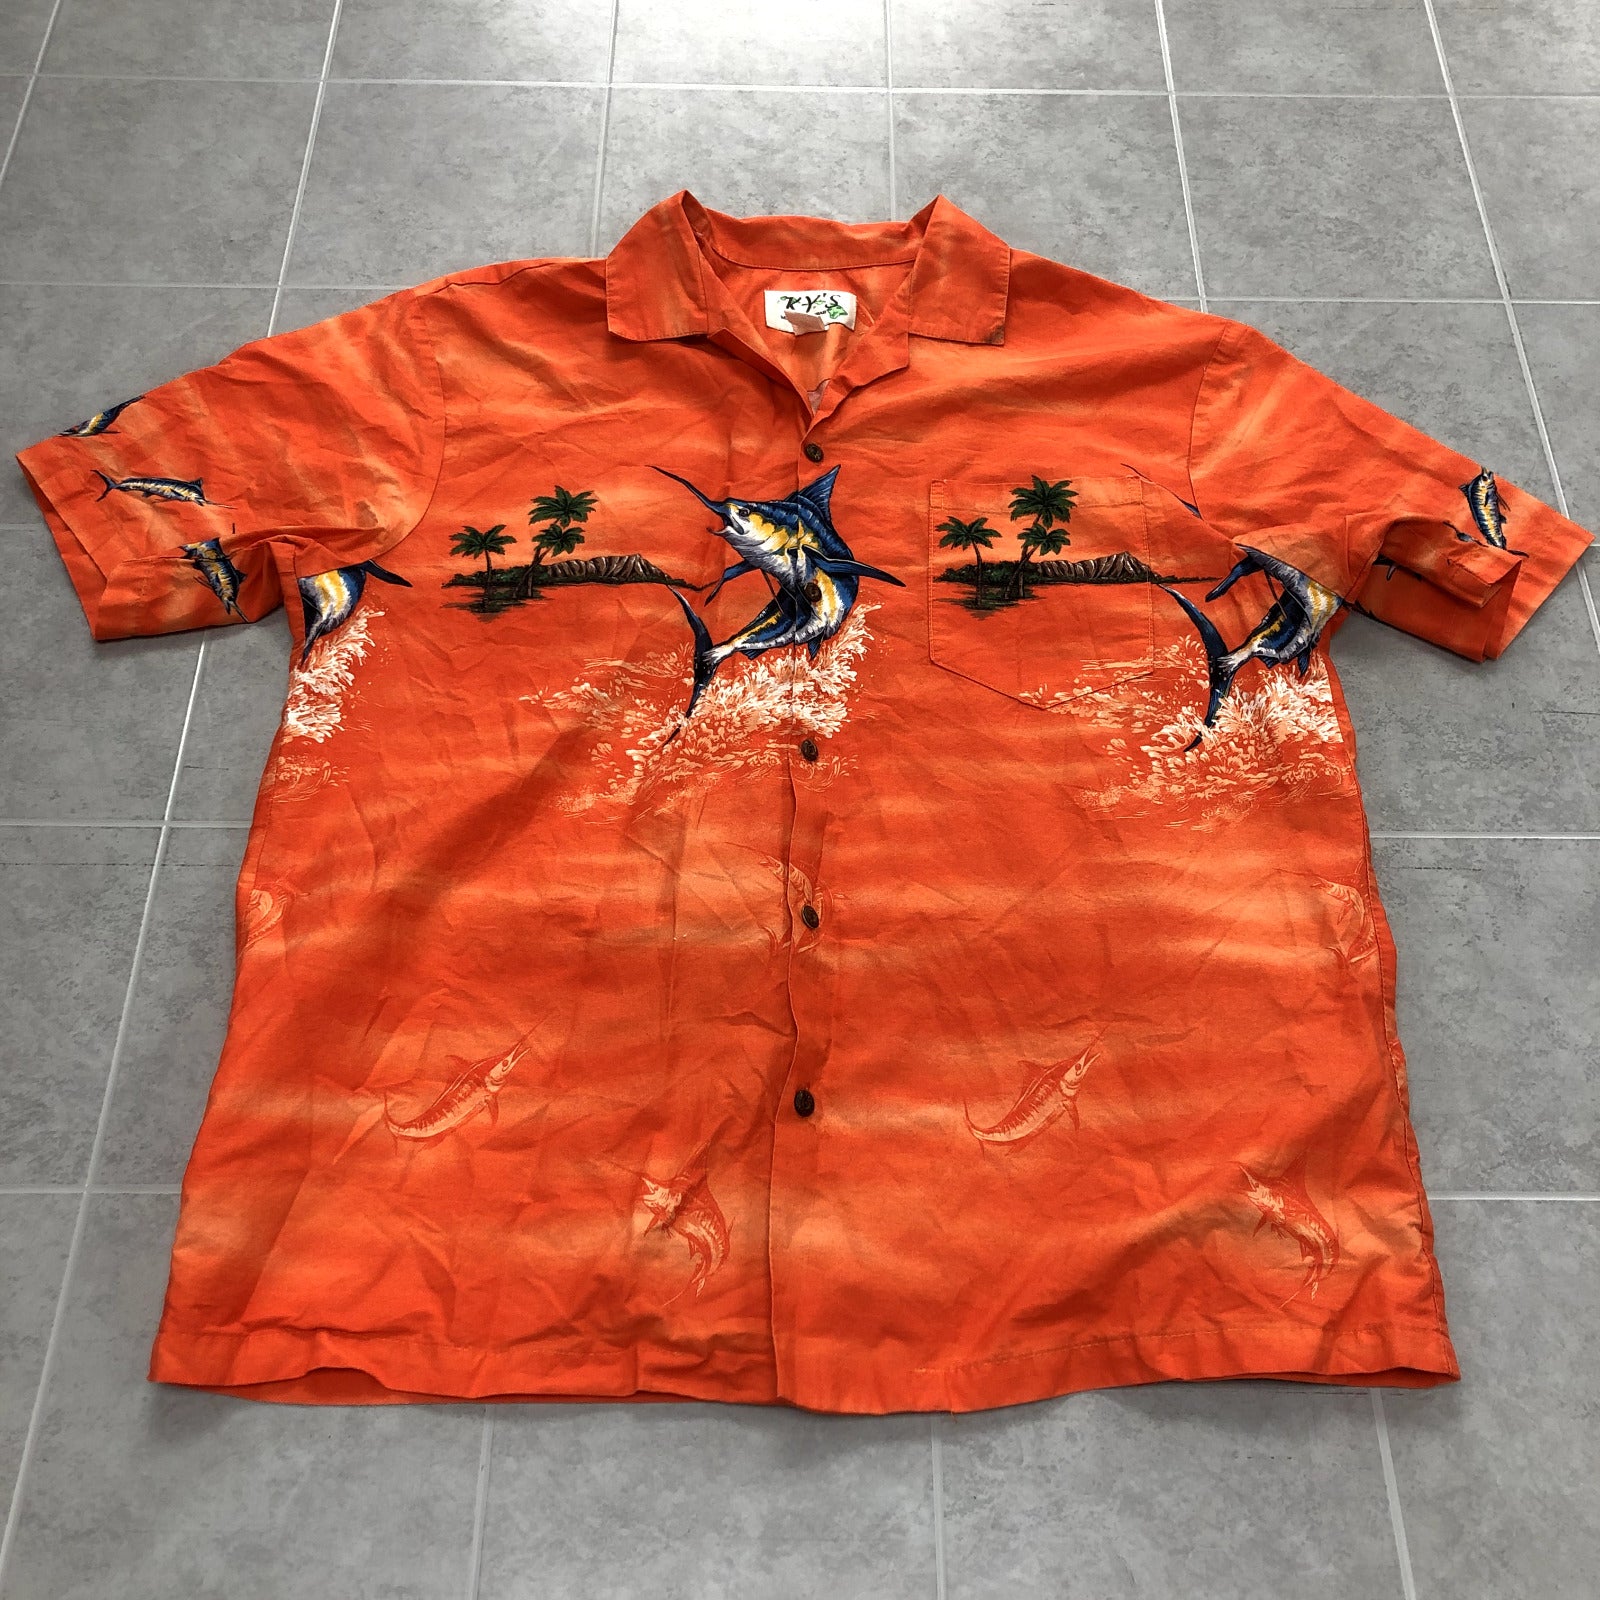 KY'S Orange Short Sleeve Casual Button Up Hawaiian Shirt Adult Size XL